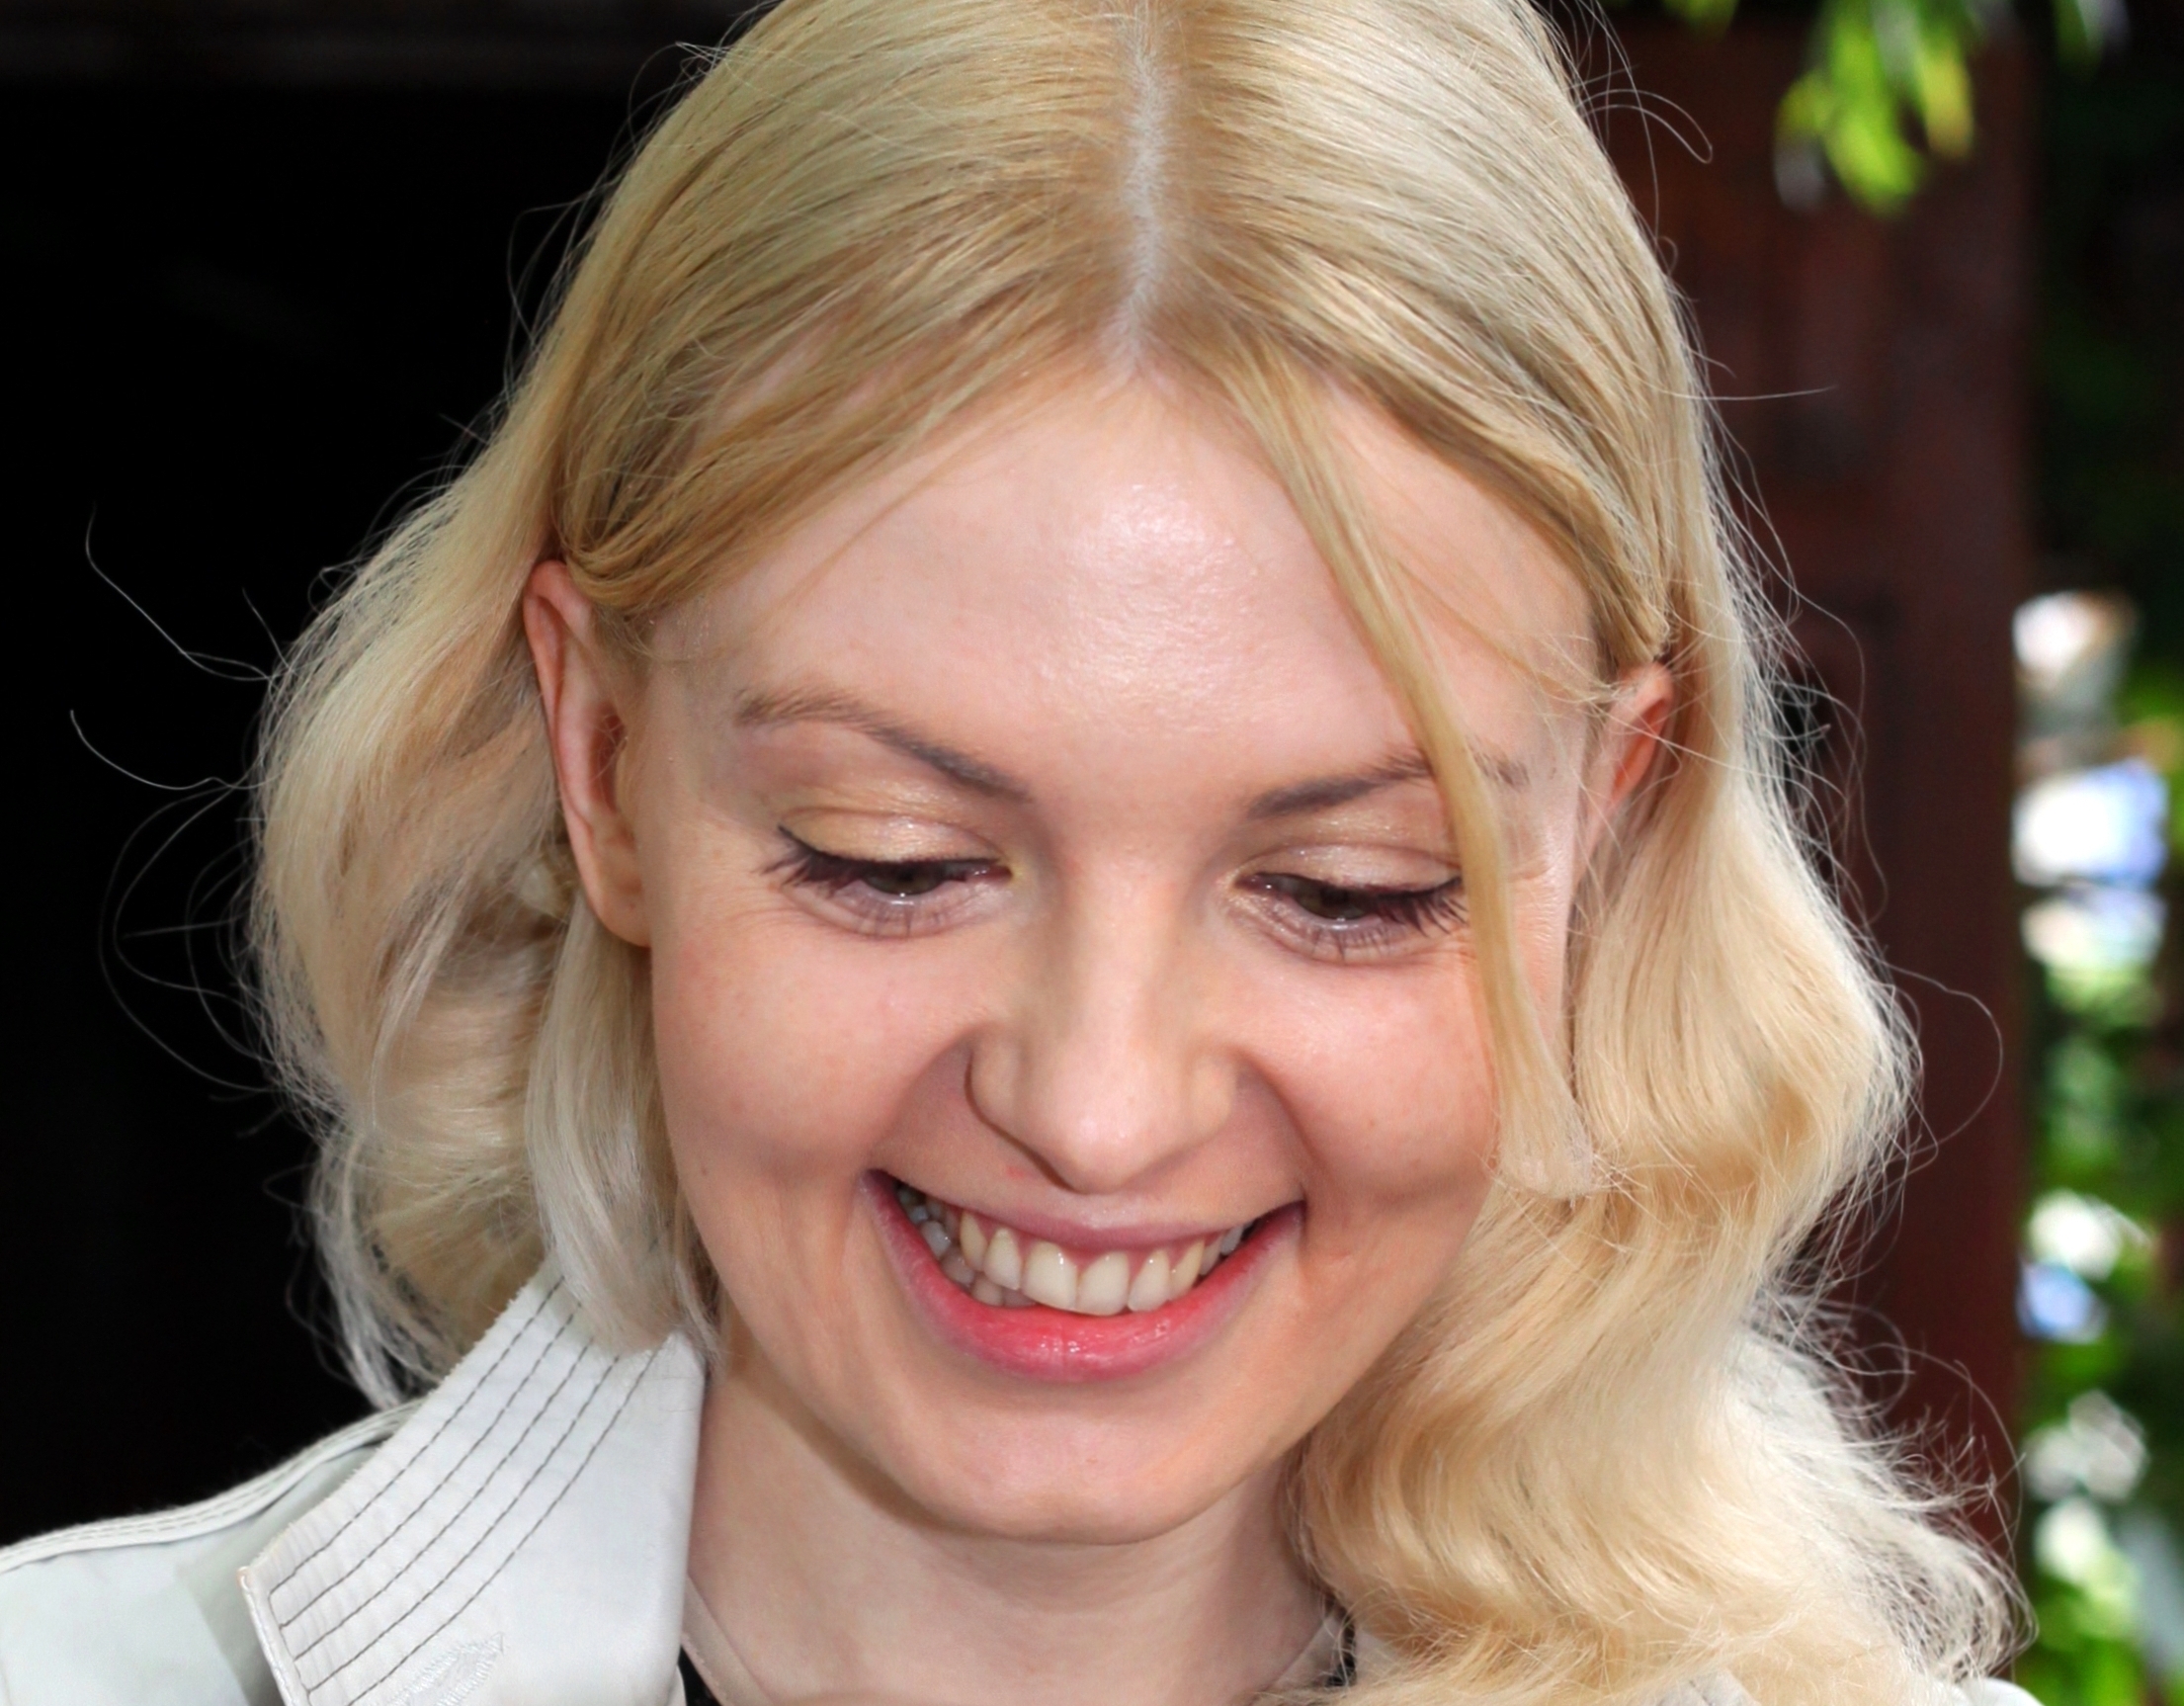 a cute blond woman photographed in June 2013, portrait 1/3